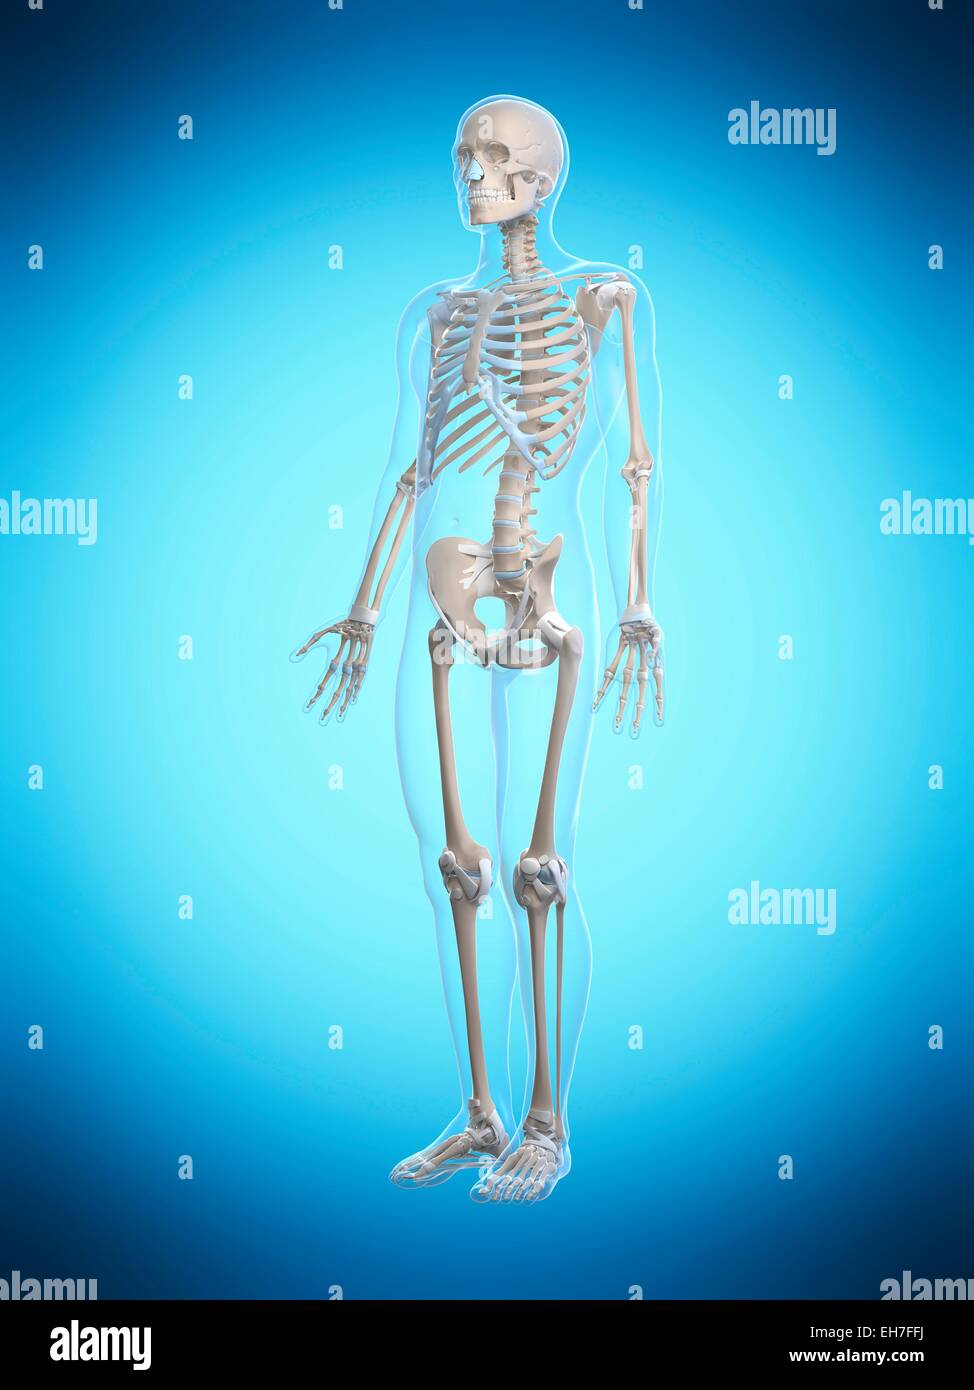 Human skeletal system, artwork Stock Photo - Alamy